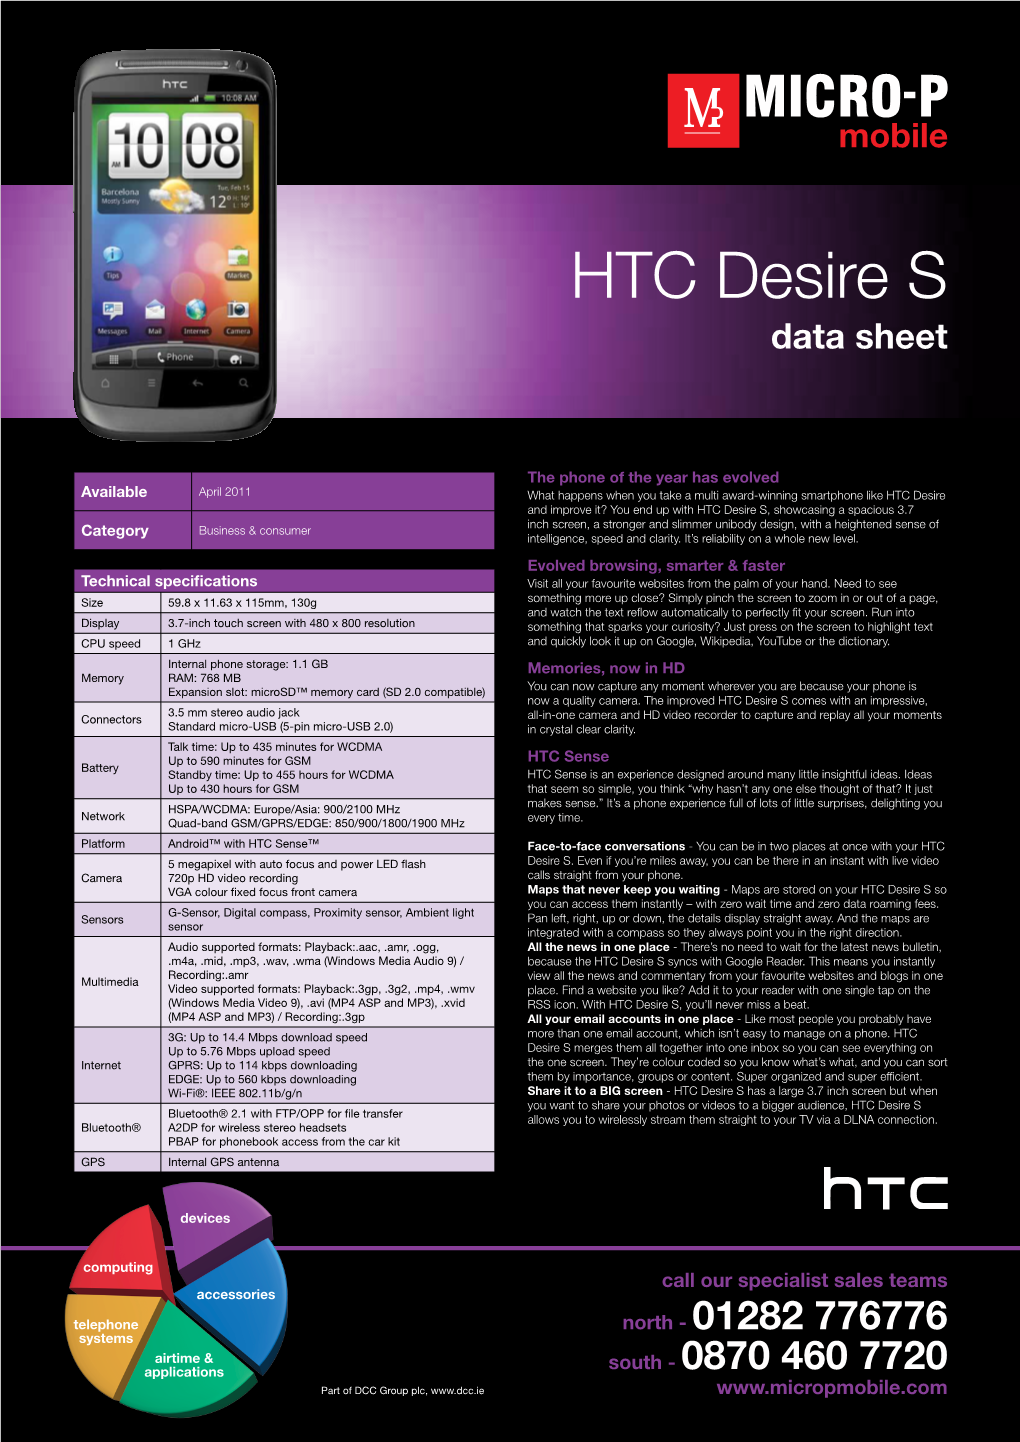 HTC Desire S Data Sheet